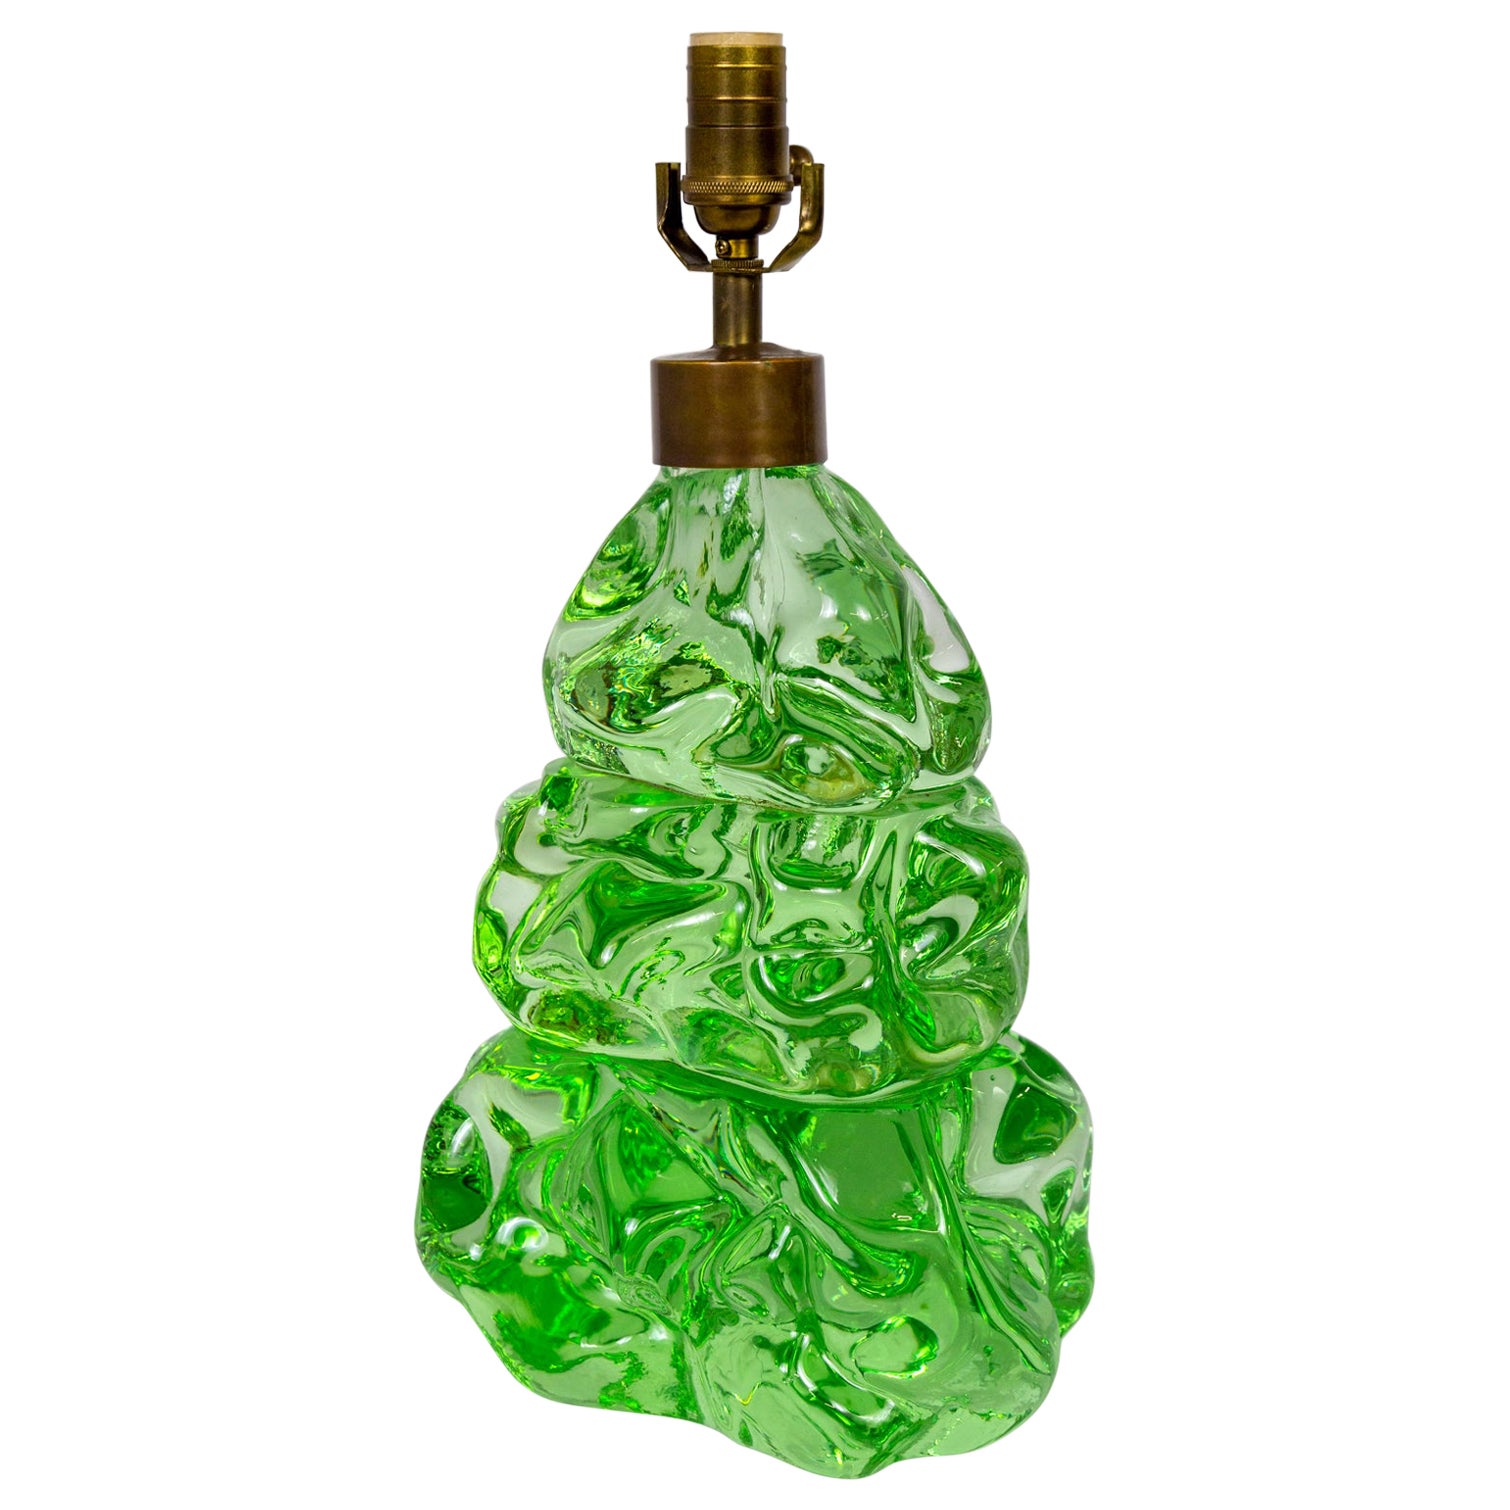 Transparent Green Glass Organic Form Lamp